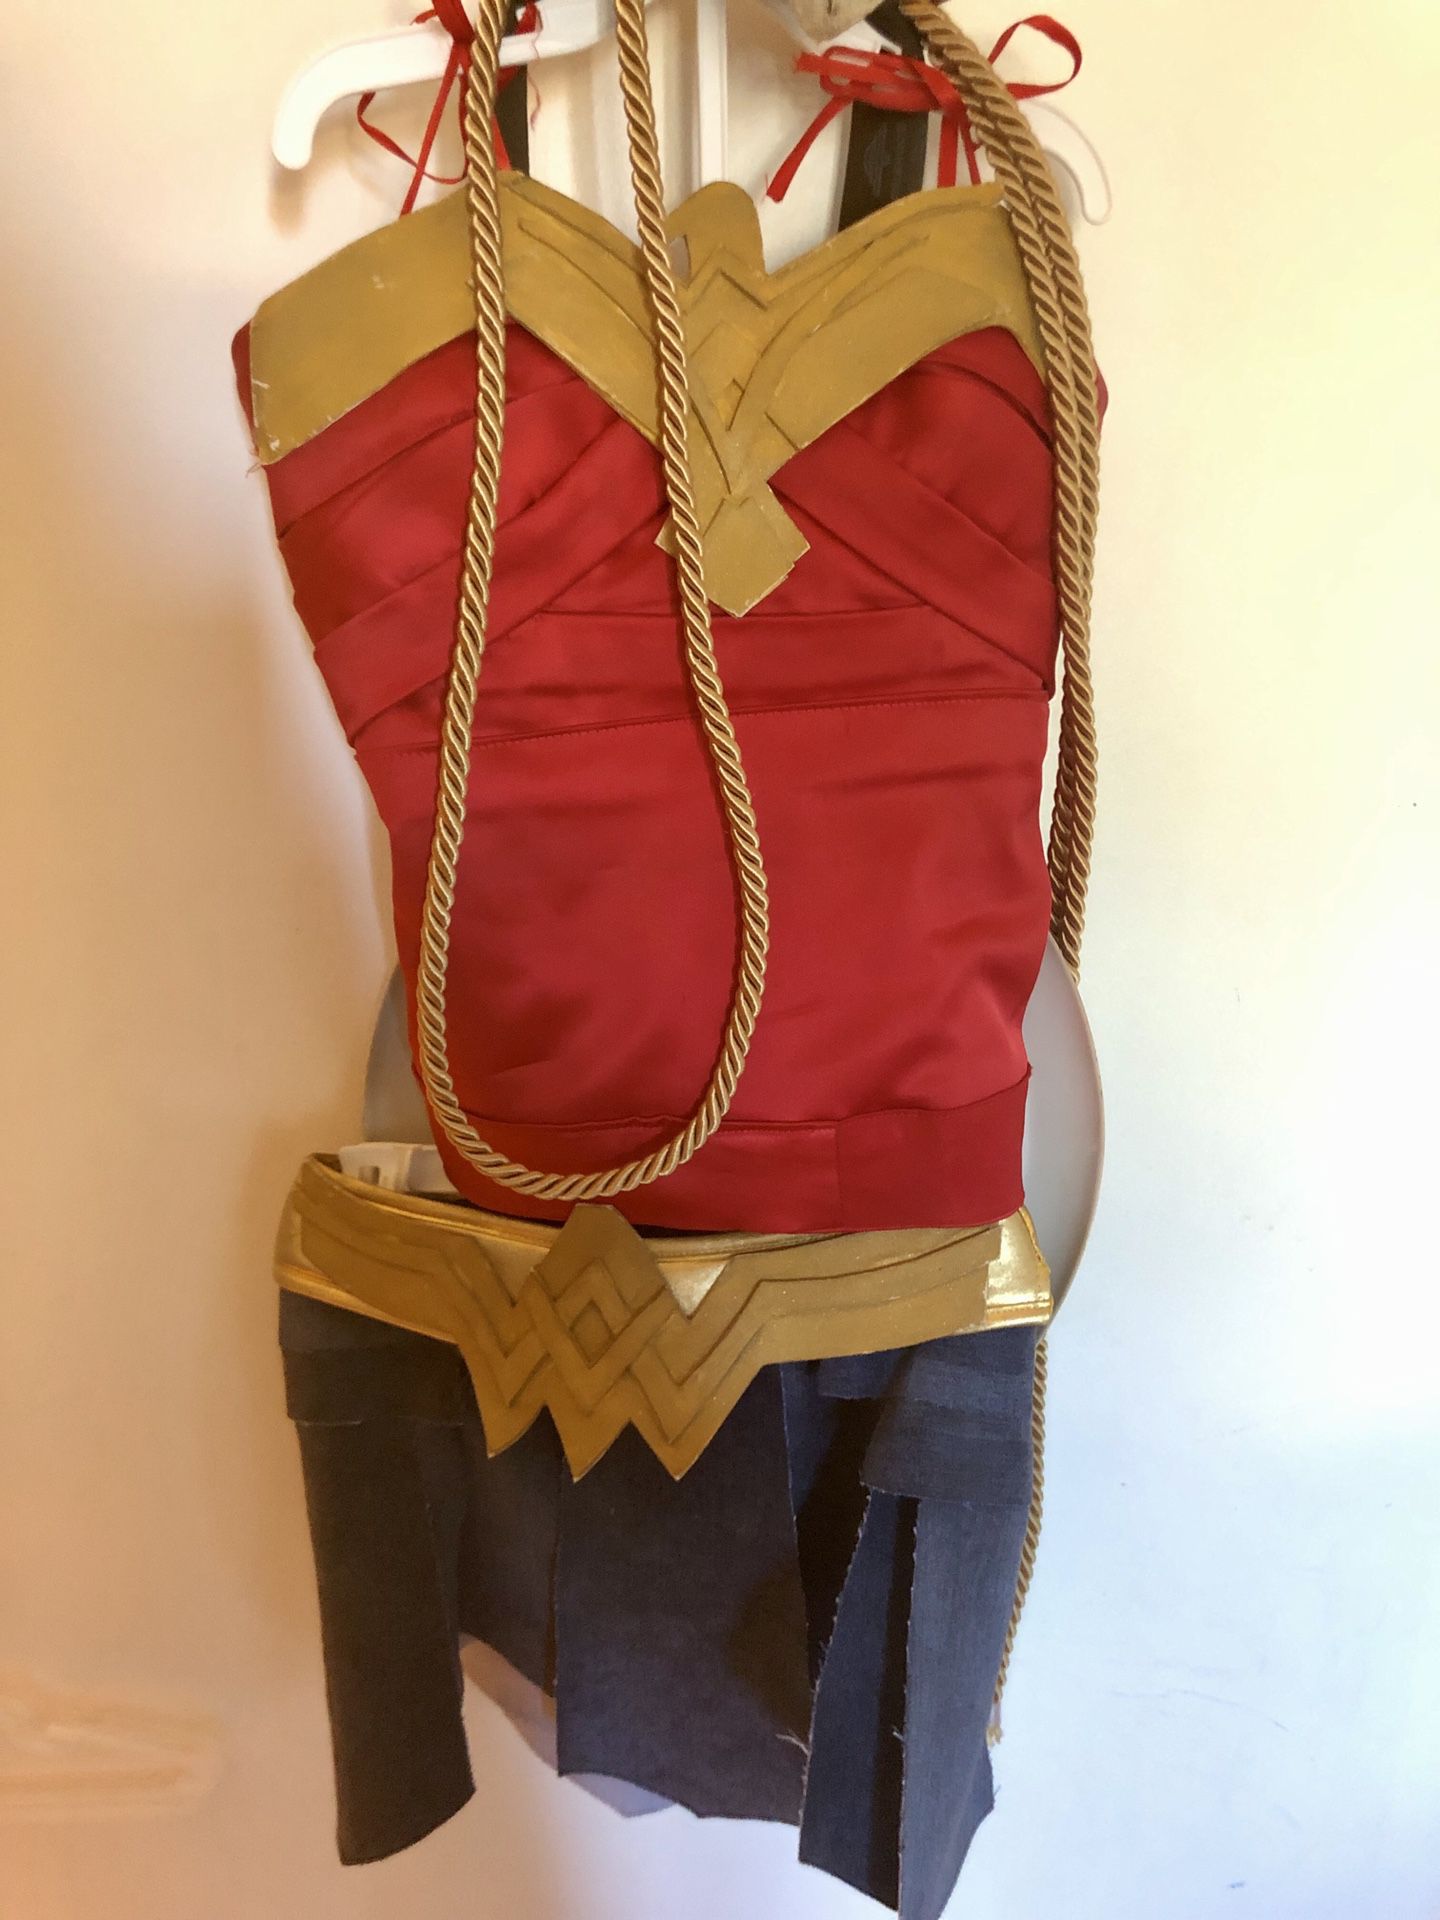 Girl Wonder Woman costume